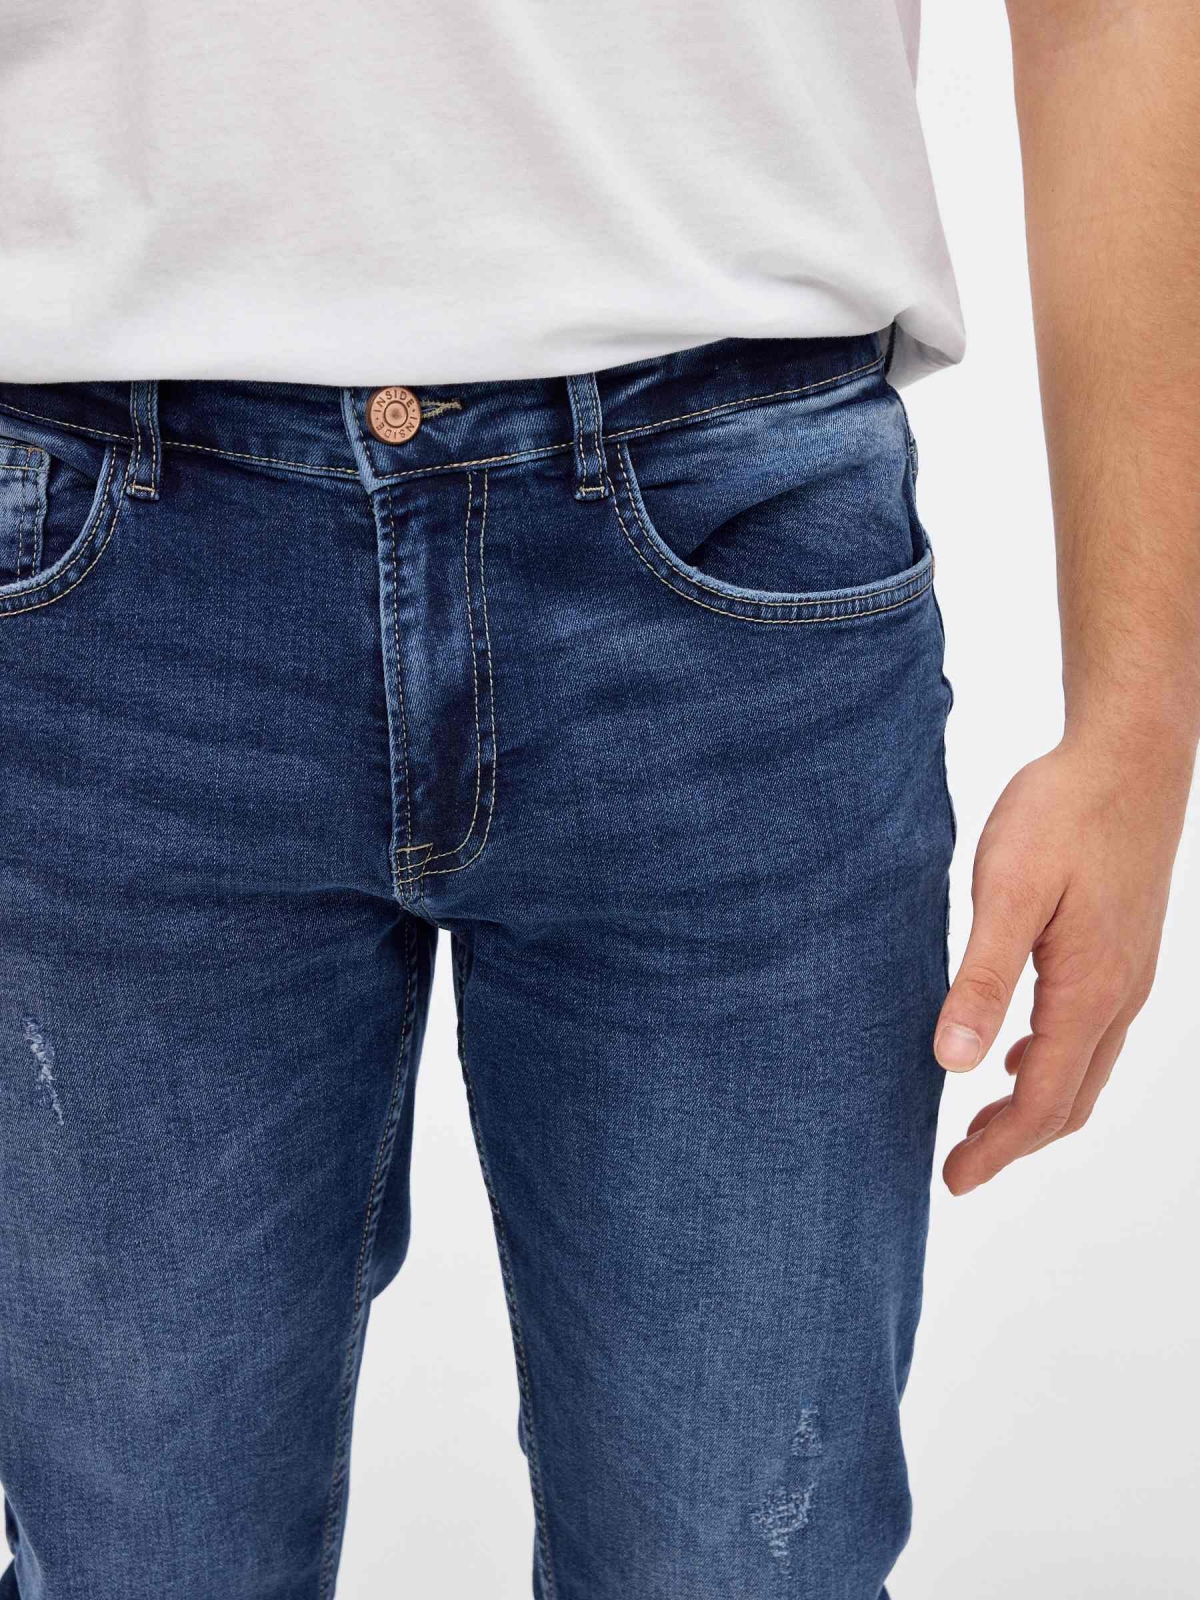 Regular jeans blue detail view